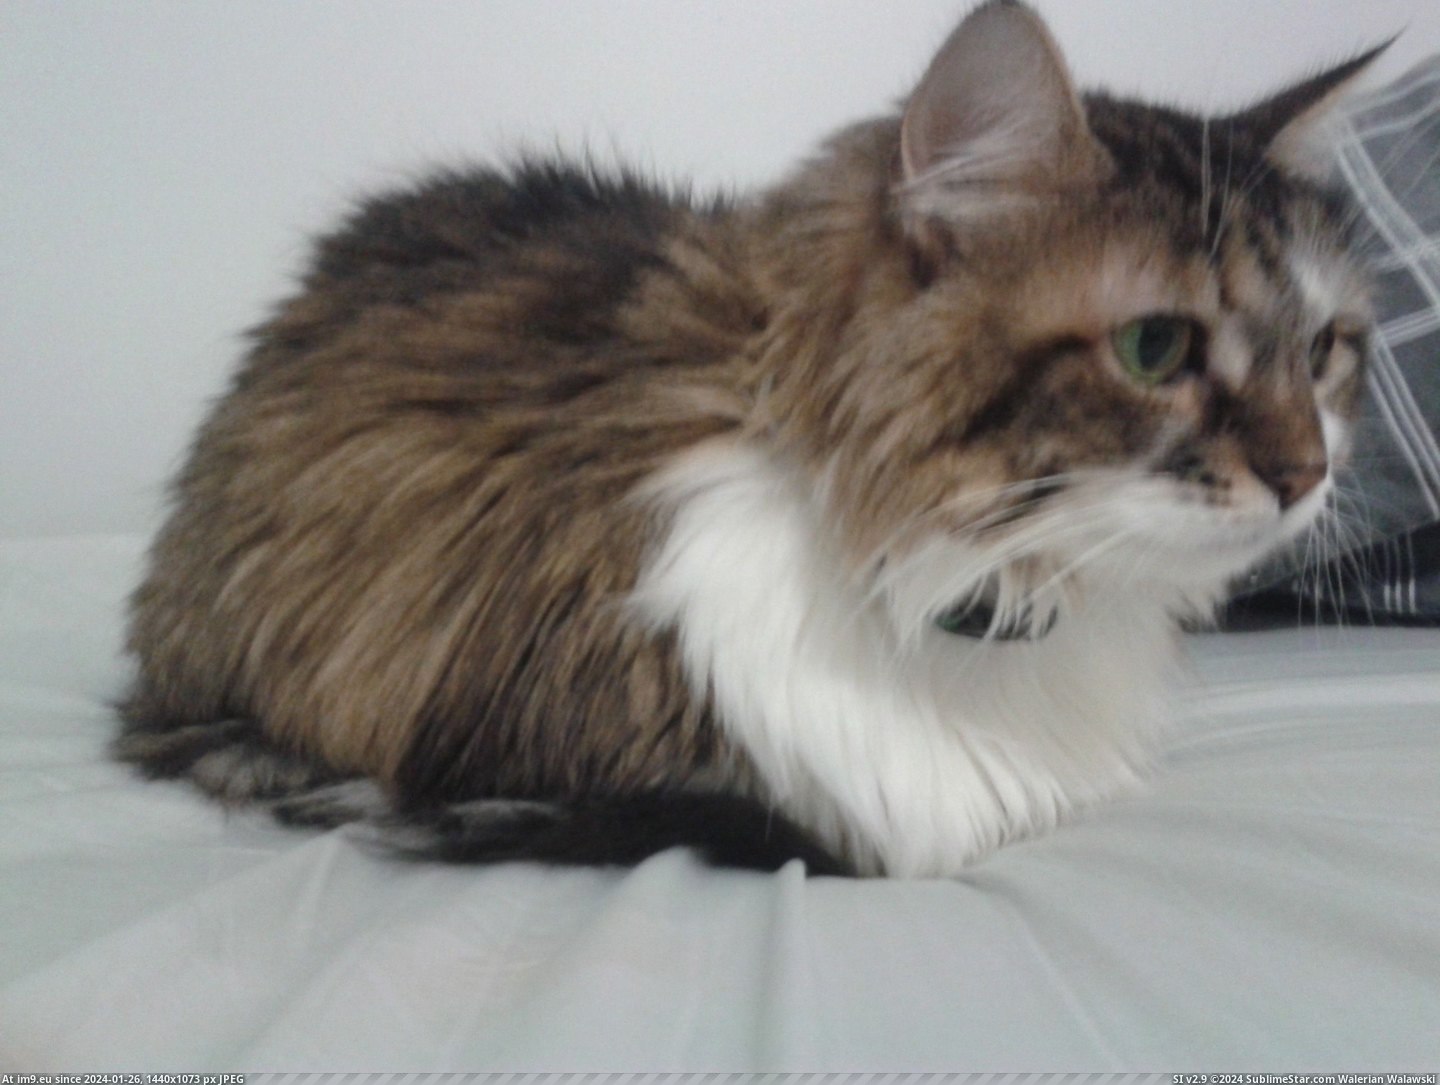 #Cats #Loaf #Cat [Cats] Cat Loaf Pic. (Изображение из альбом My r/CATS favs))